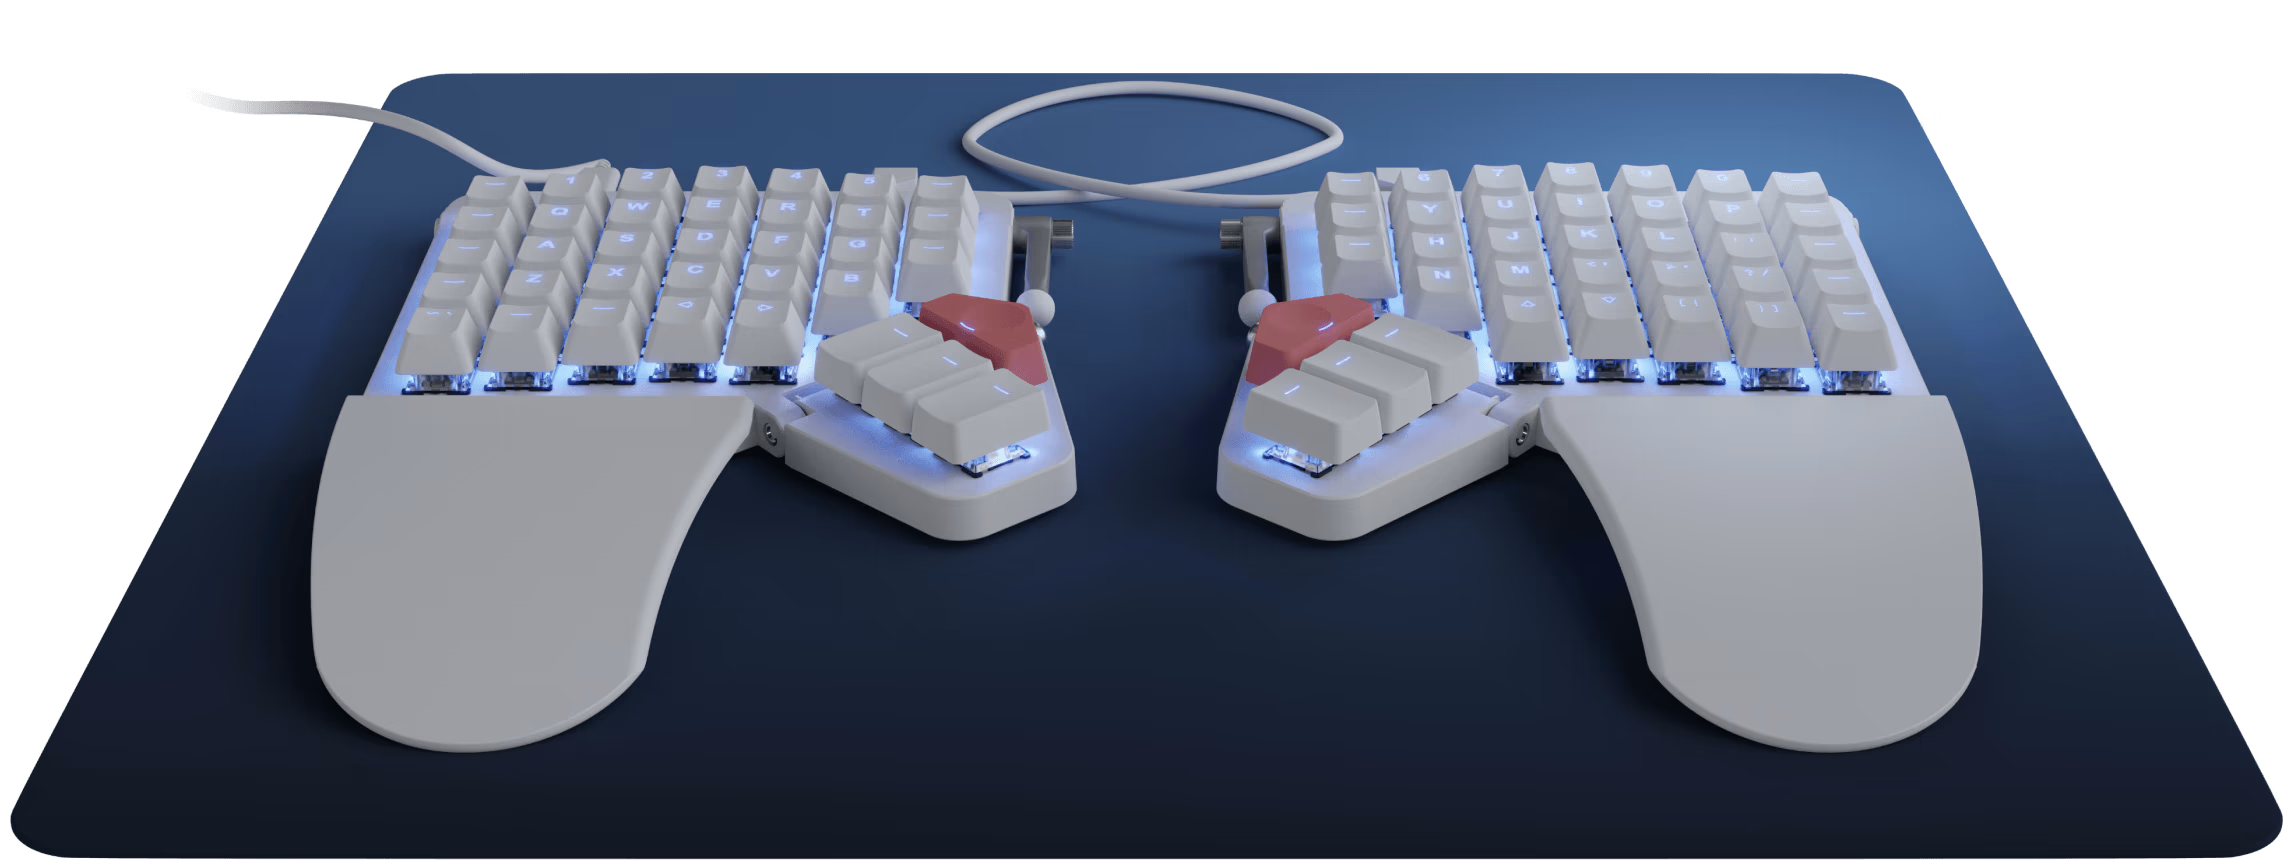 A picture of the Moonlander Mark 1 split keyboard